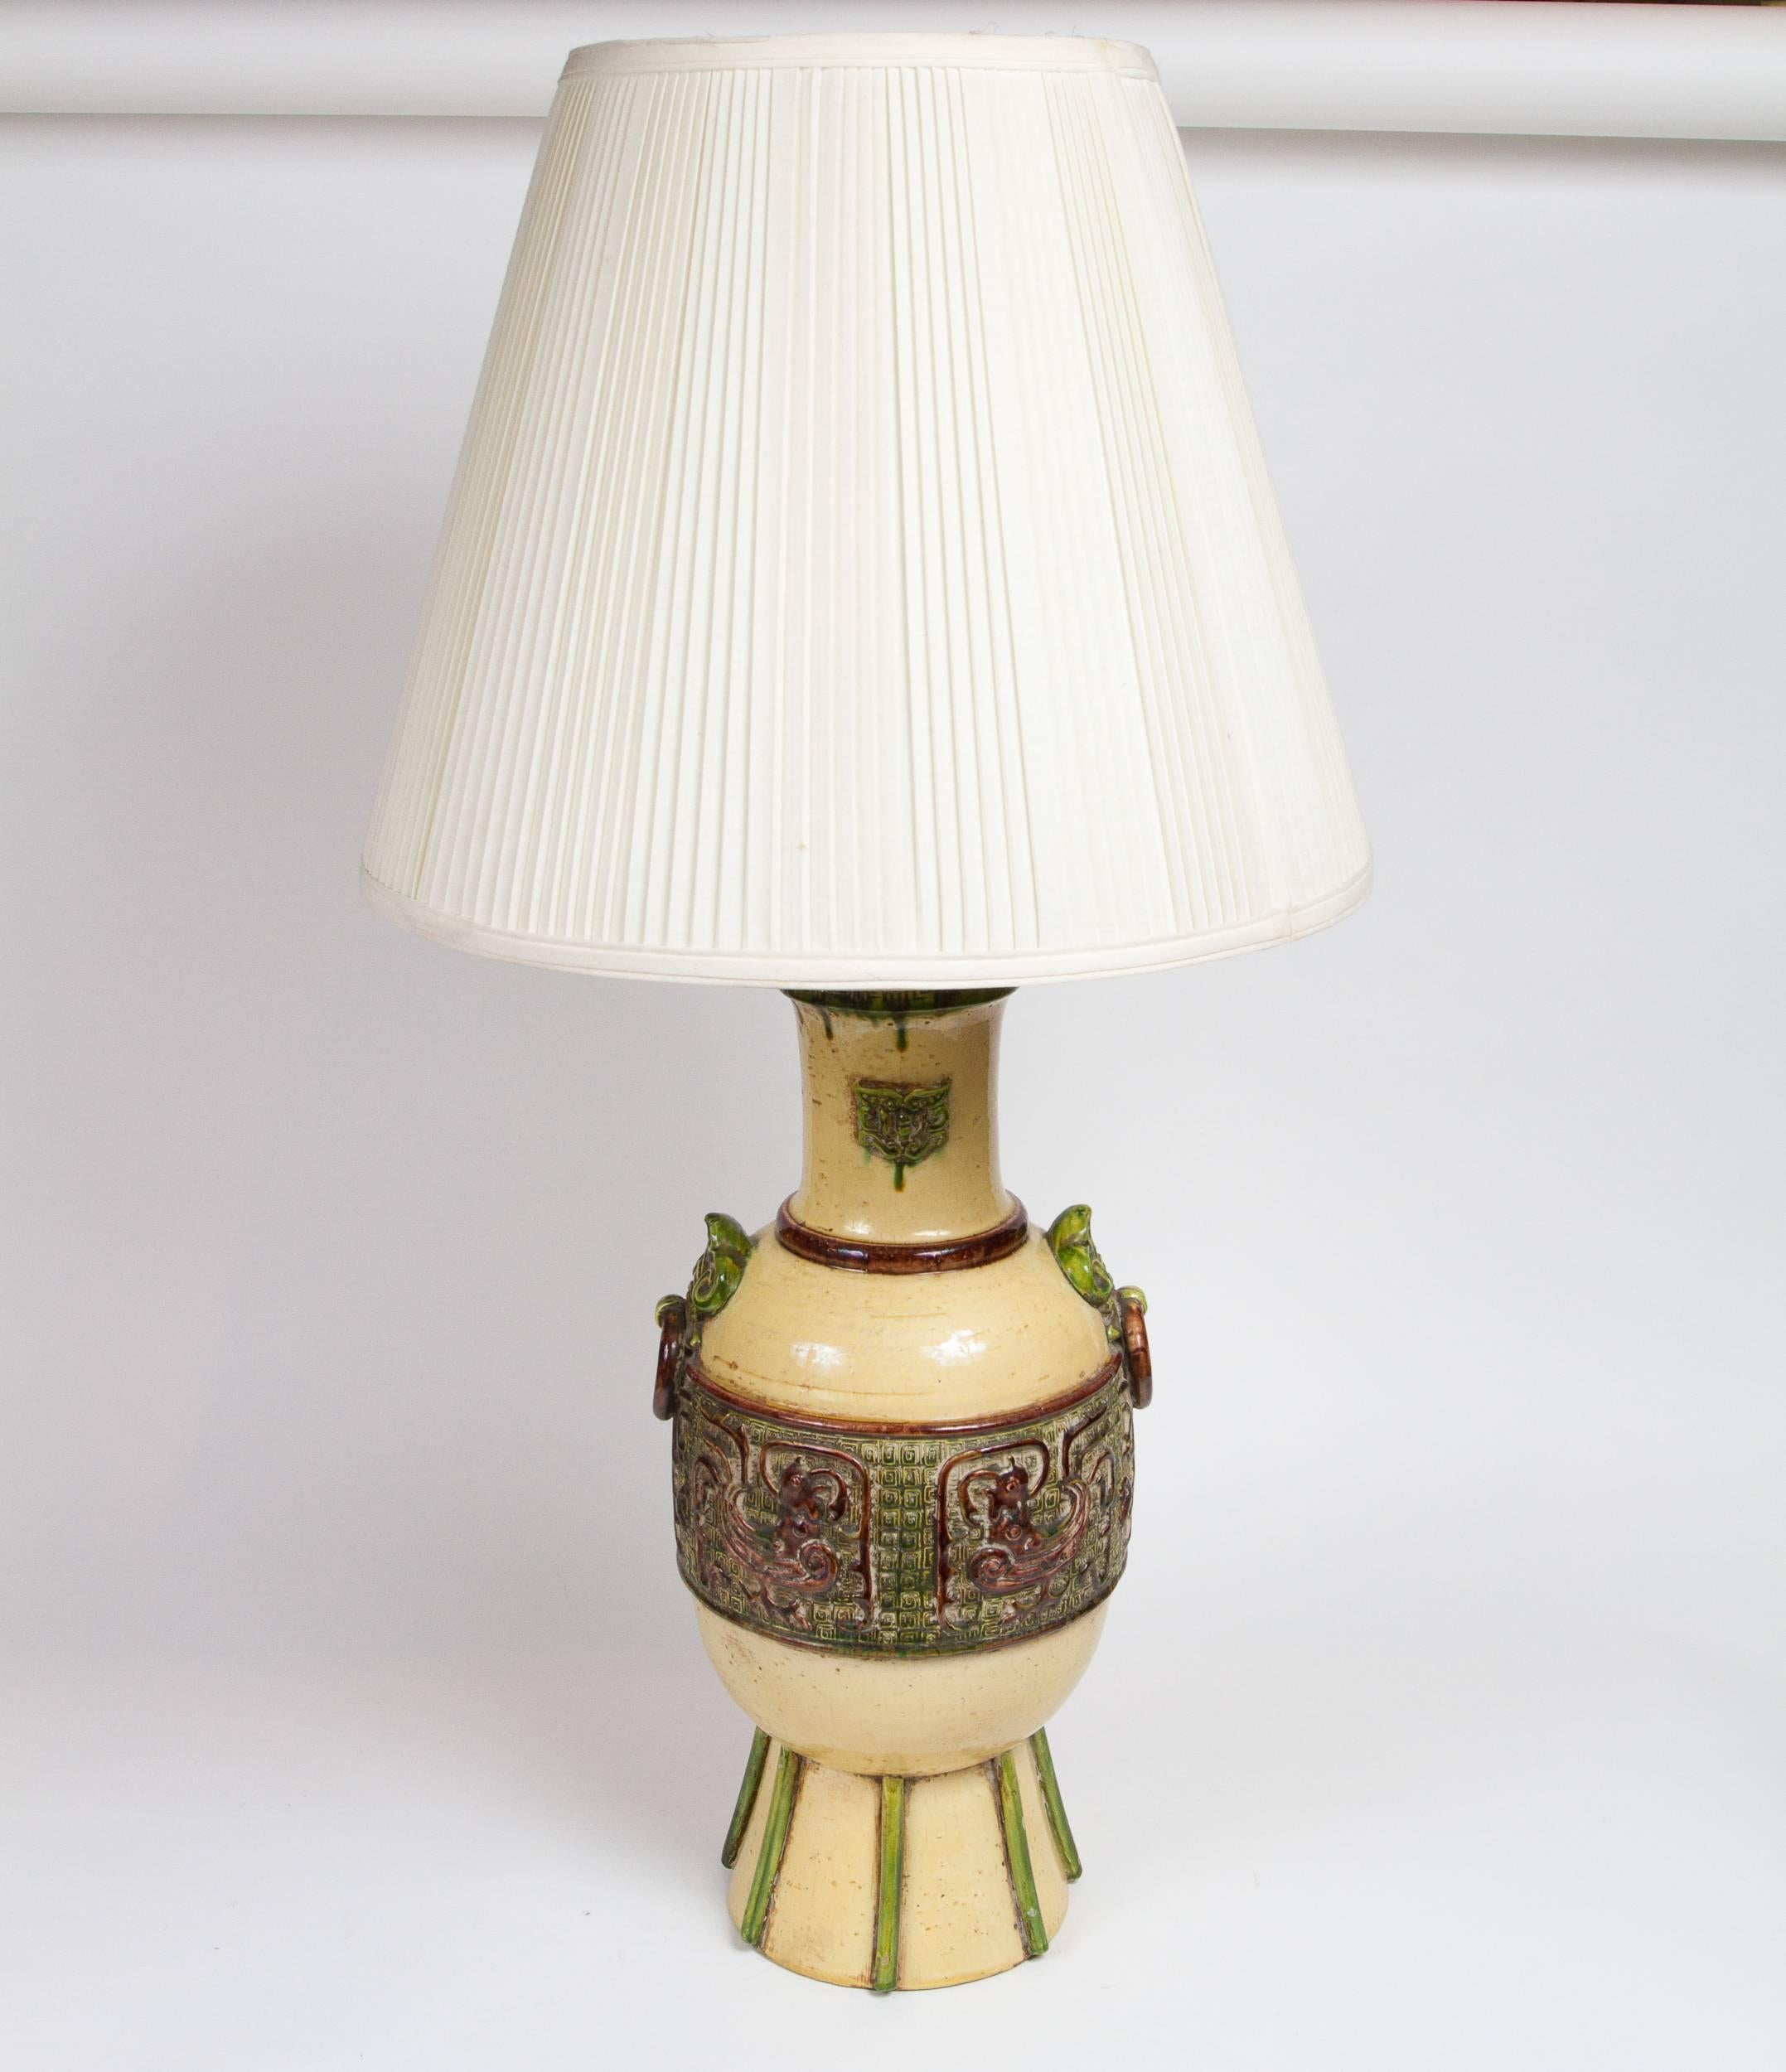 Stylish polychrome glazed ceramic Asian Modern Archaistic style table lamp by Ugo Zaccagnini.